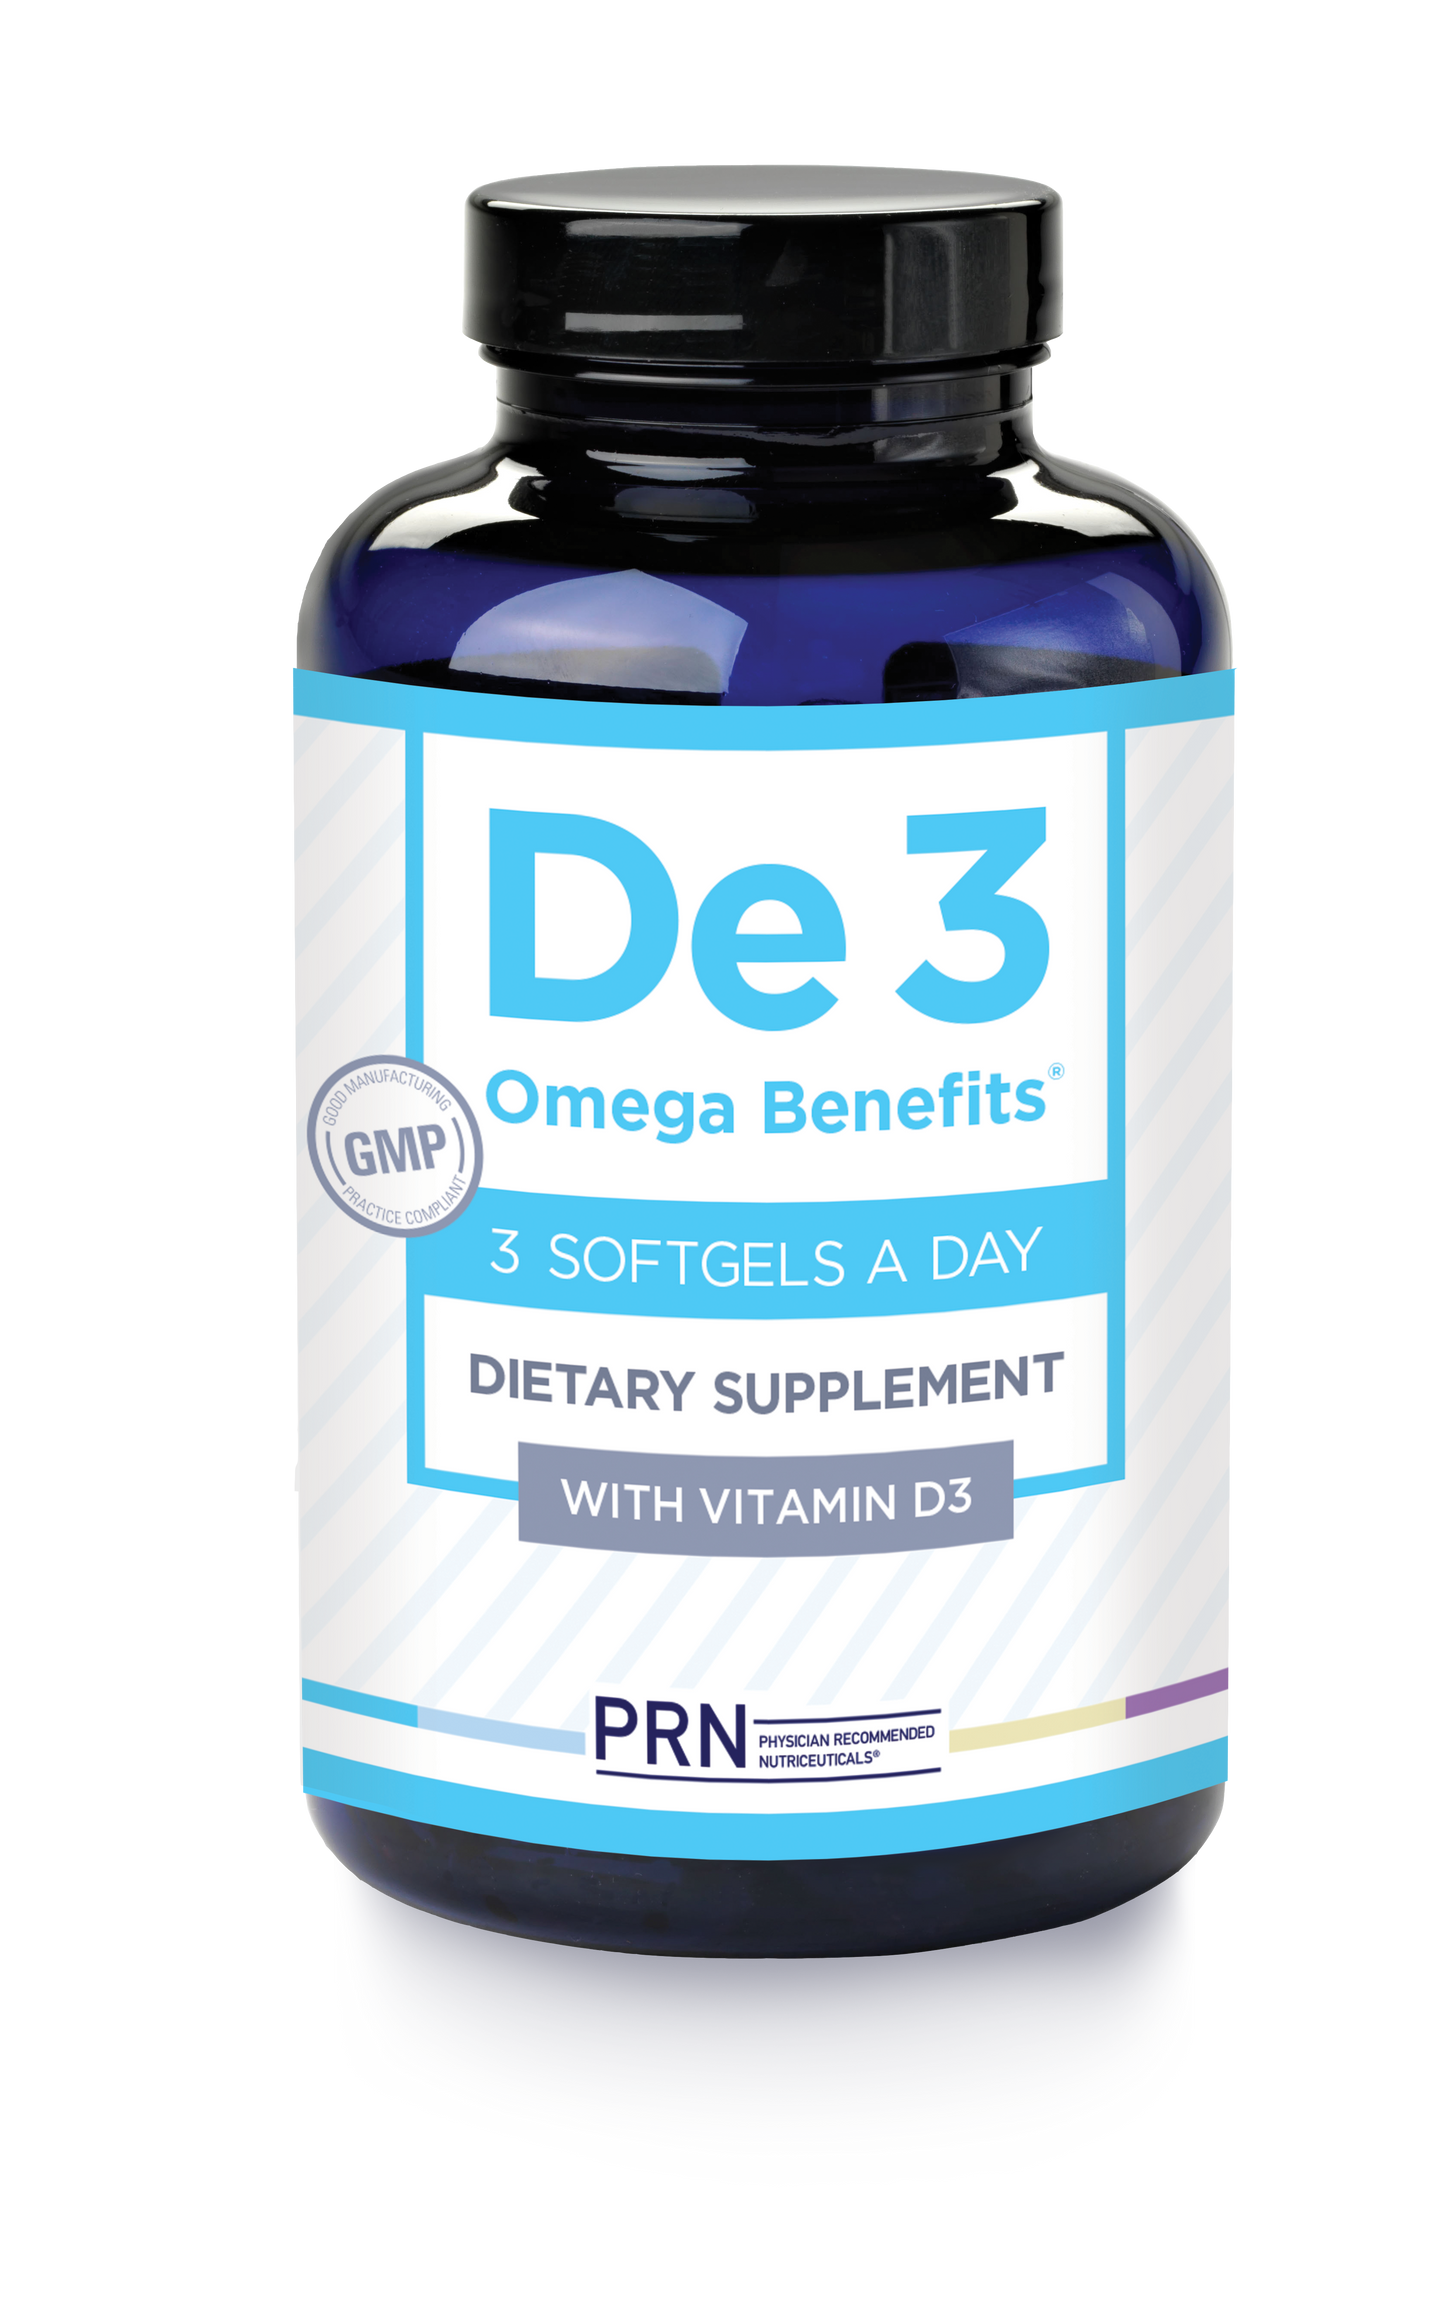 De 3 Omega Benefits Dietary Supplement bottle